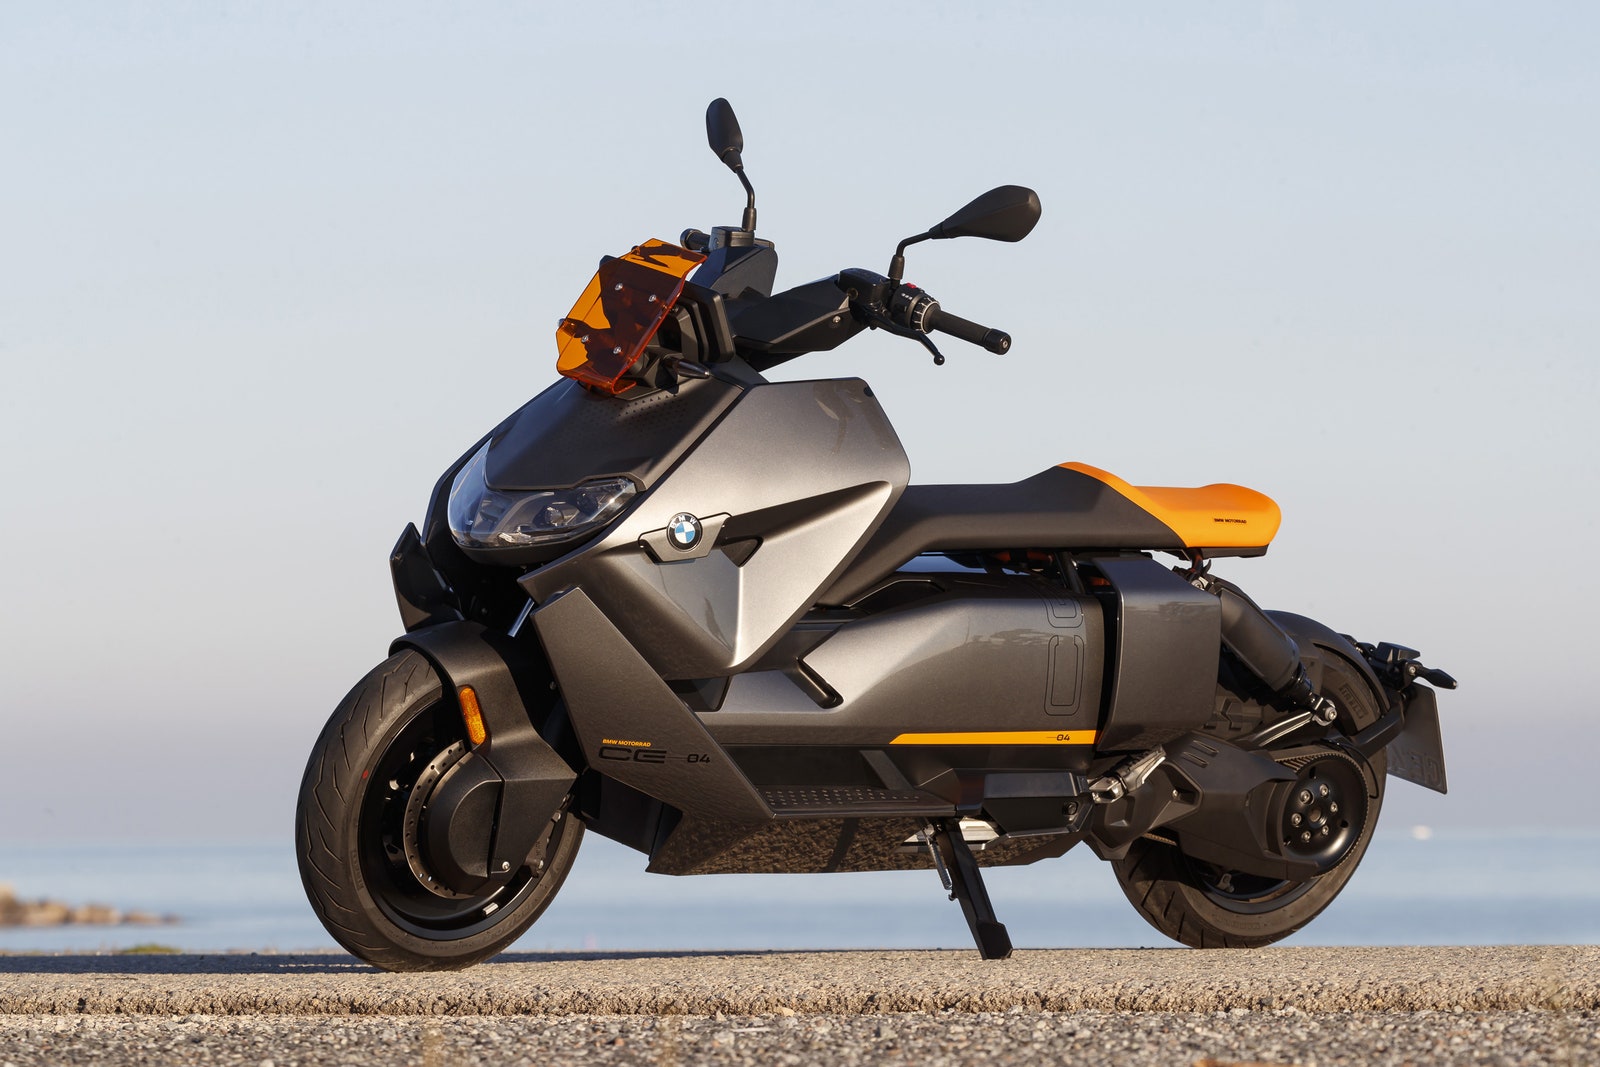 BMW CE 04 Review: Fast, Stylish E-Motorbike